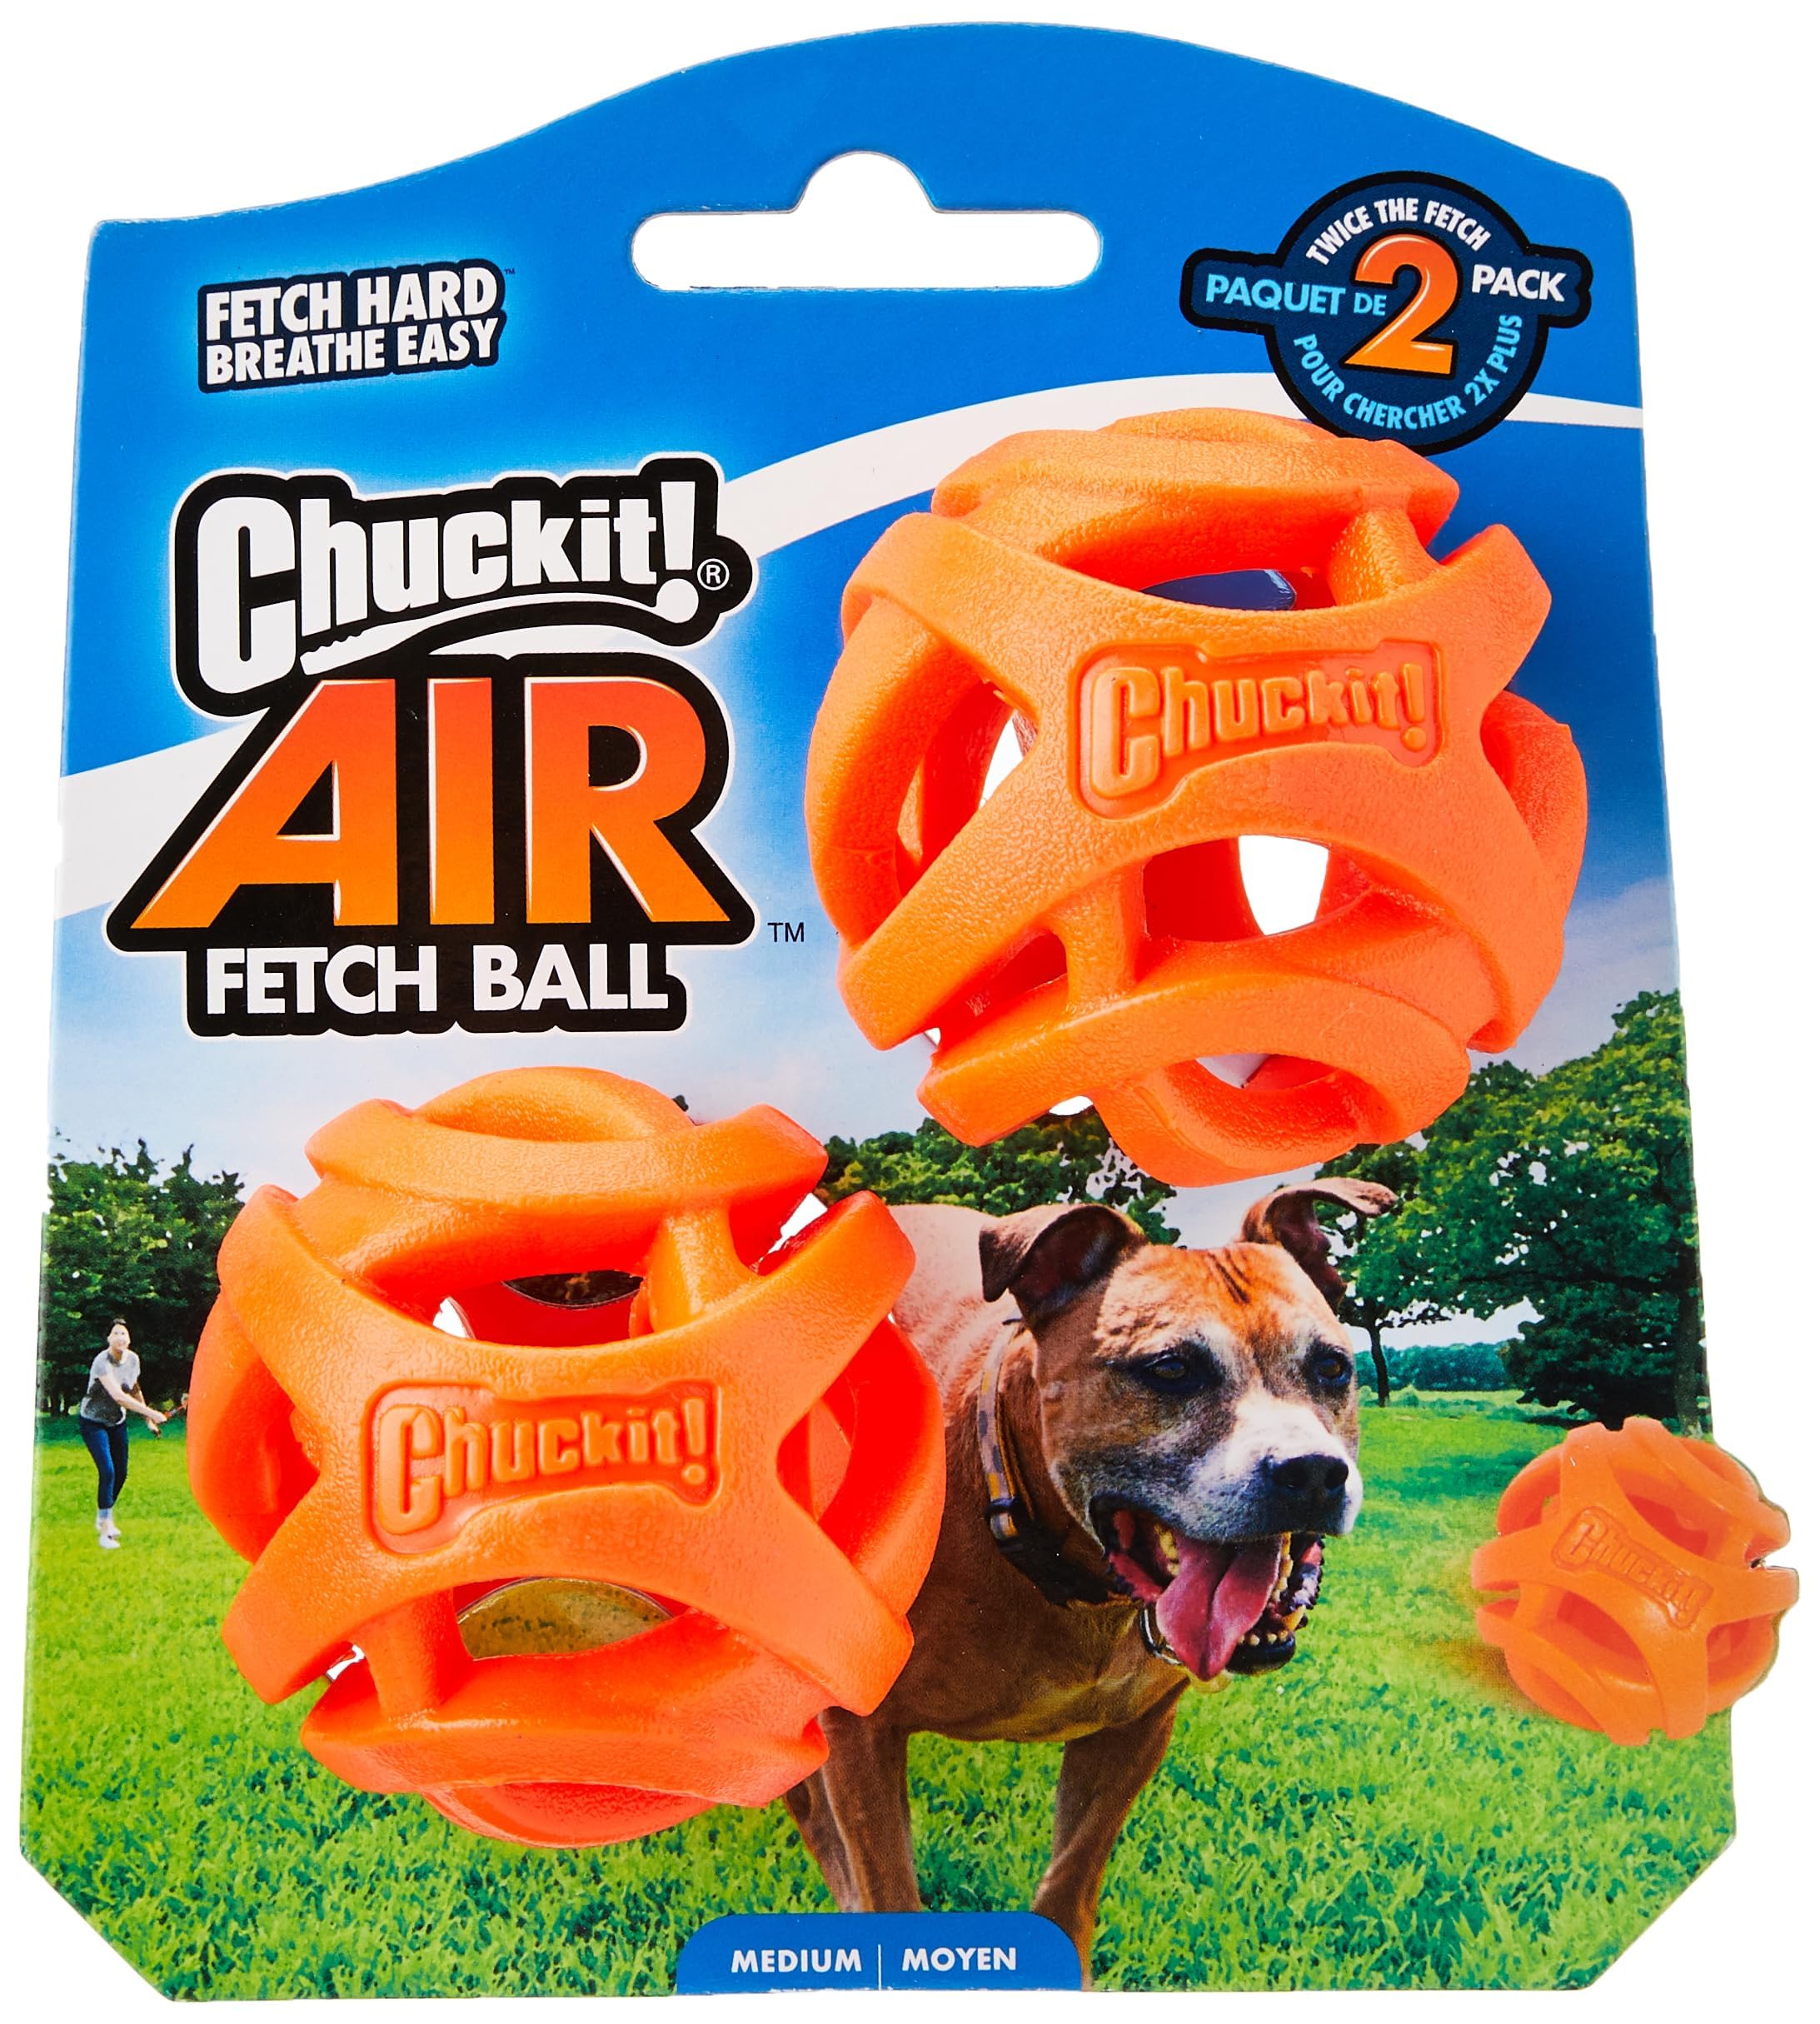 Chuckit! Air Fetch Ball Dog Toy, Medium (2.5 Inch Diameter), for dogs 20-60 lbs $4.22